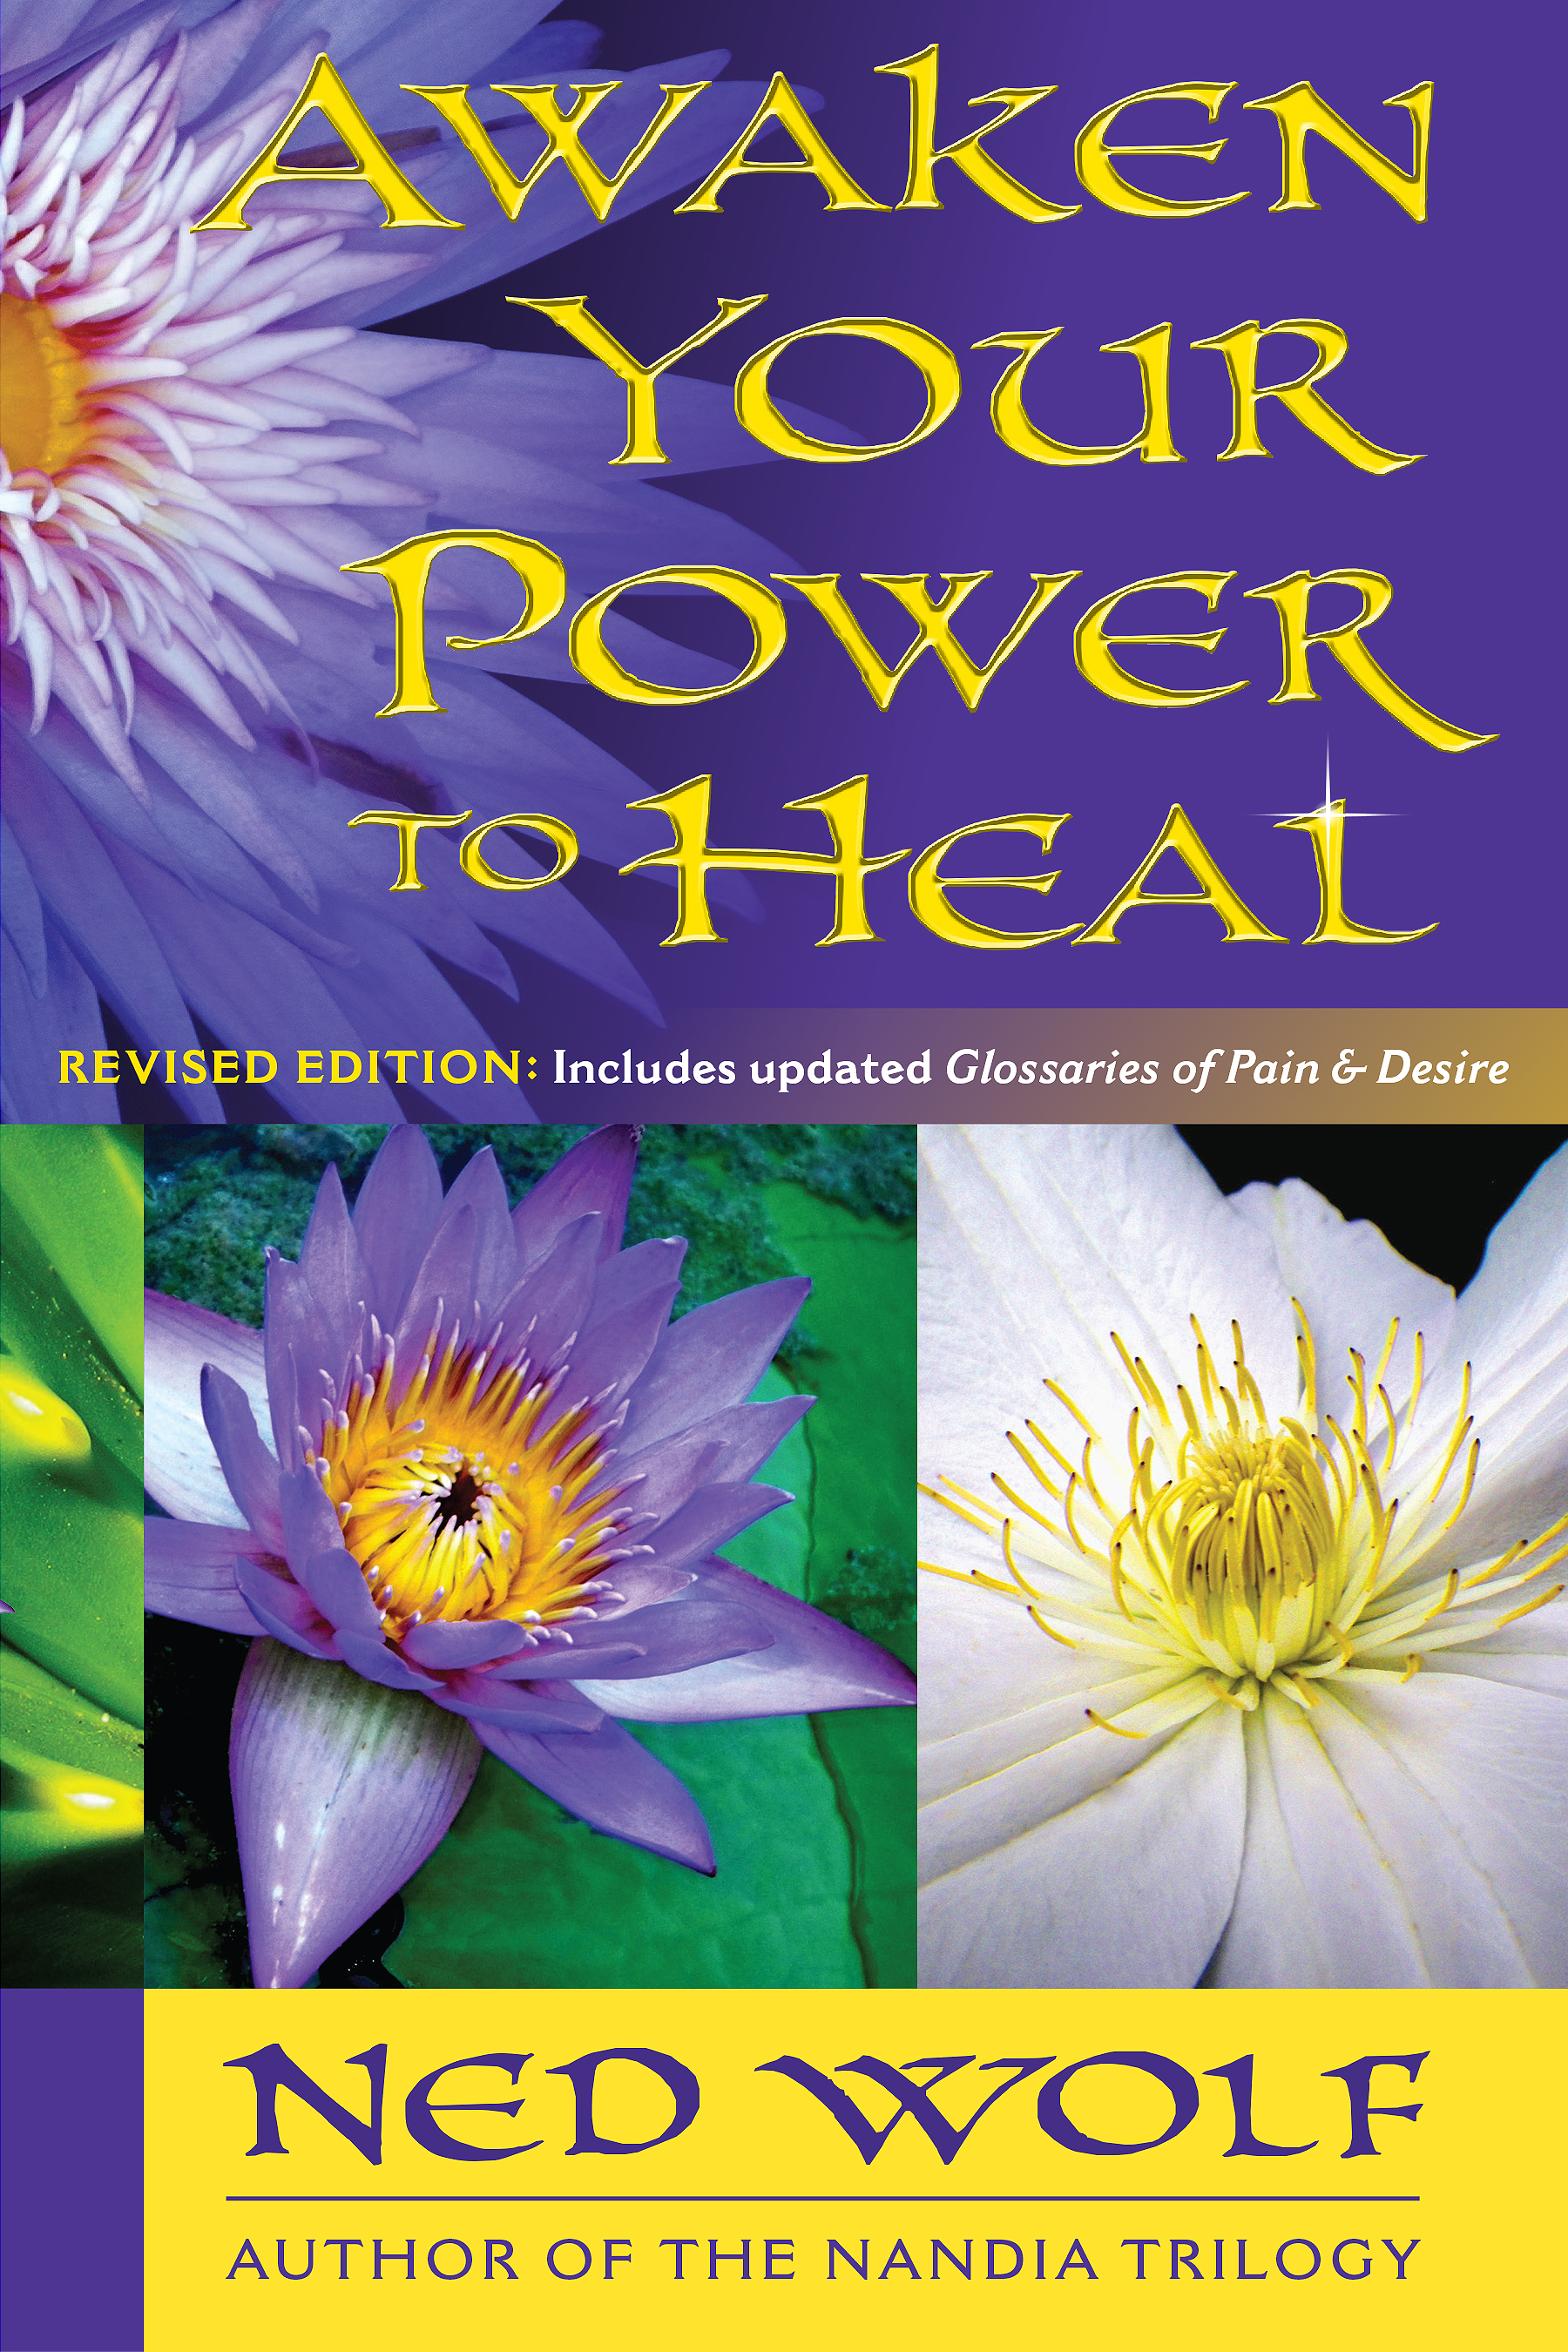 "Awaken Your Power to Heal" front cover full resolution jpg